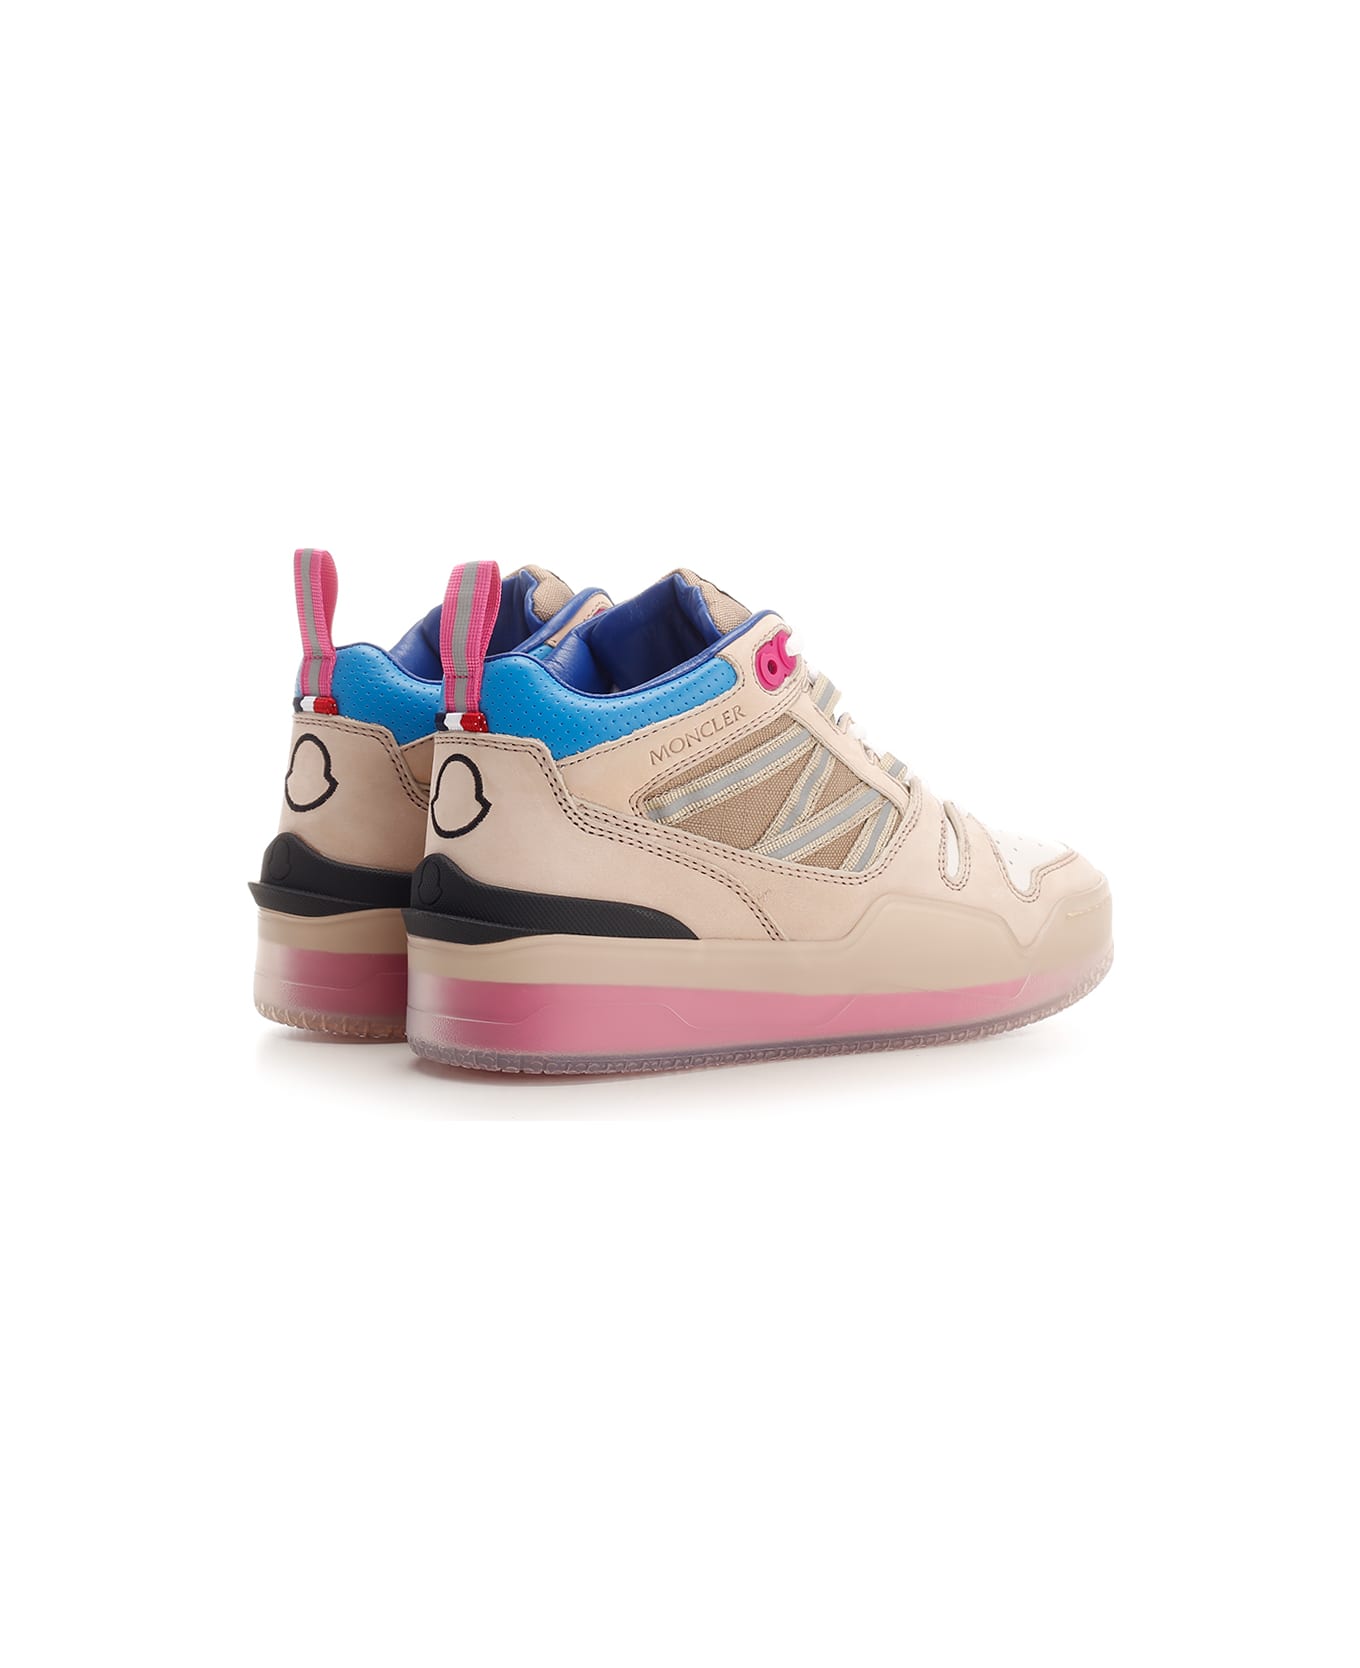 Moncler 'pivot' High Top Sneakers - Pink